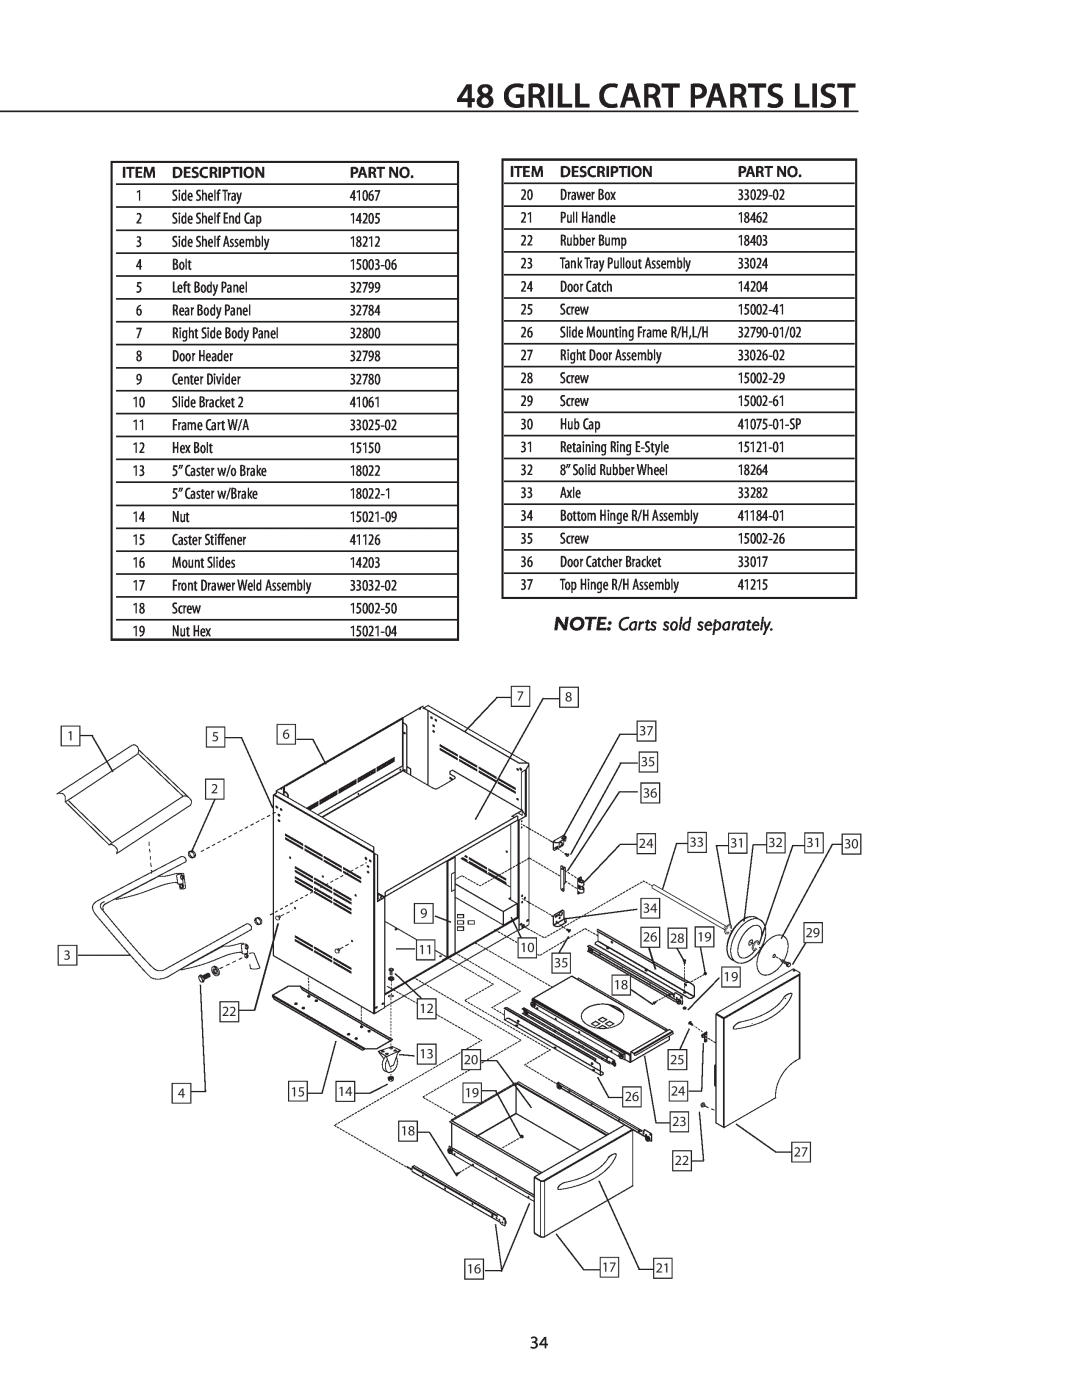 DCS BGB36-BQAR manual Grill Cart Parts List, NOTE Carts sold separately 